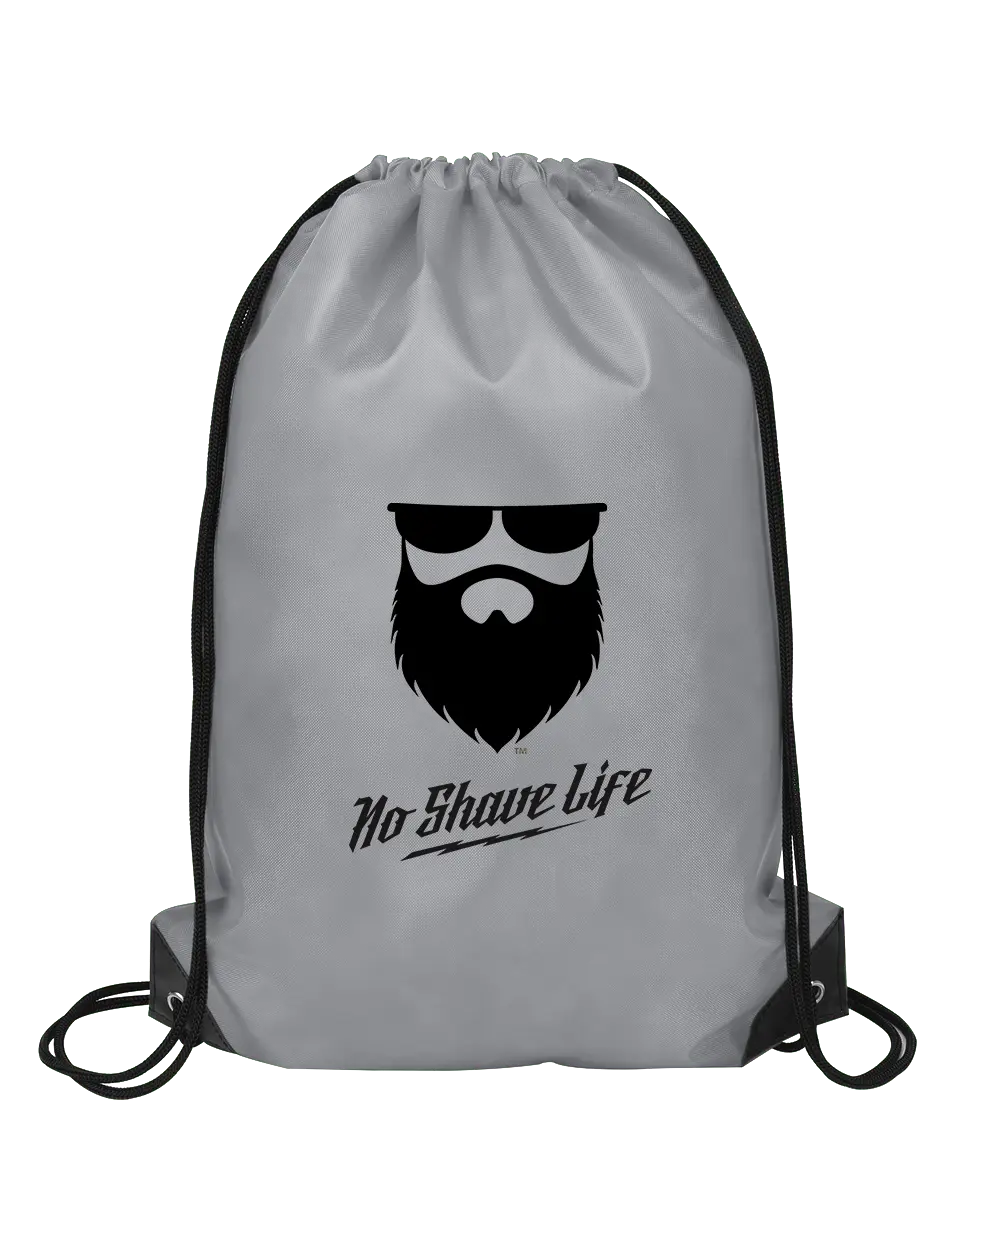 No Shave Life Heavy Duty Drawstring Bag|Bags